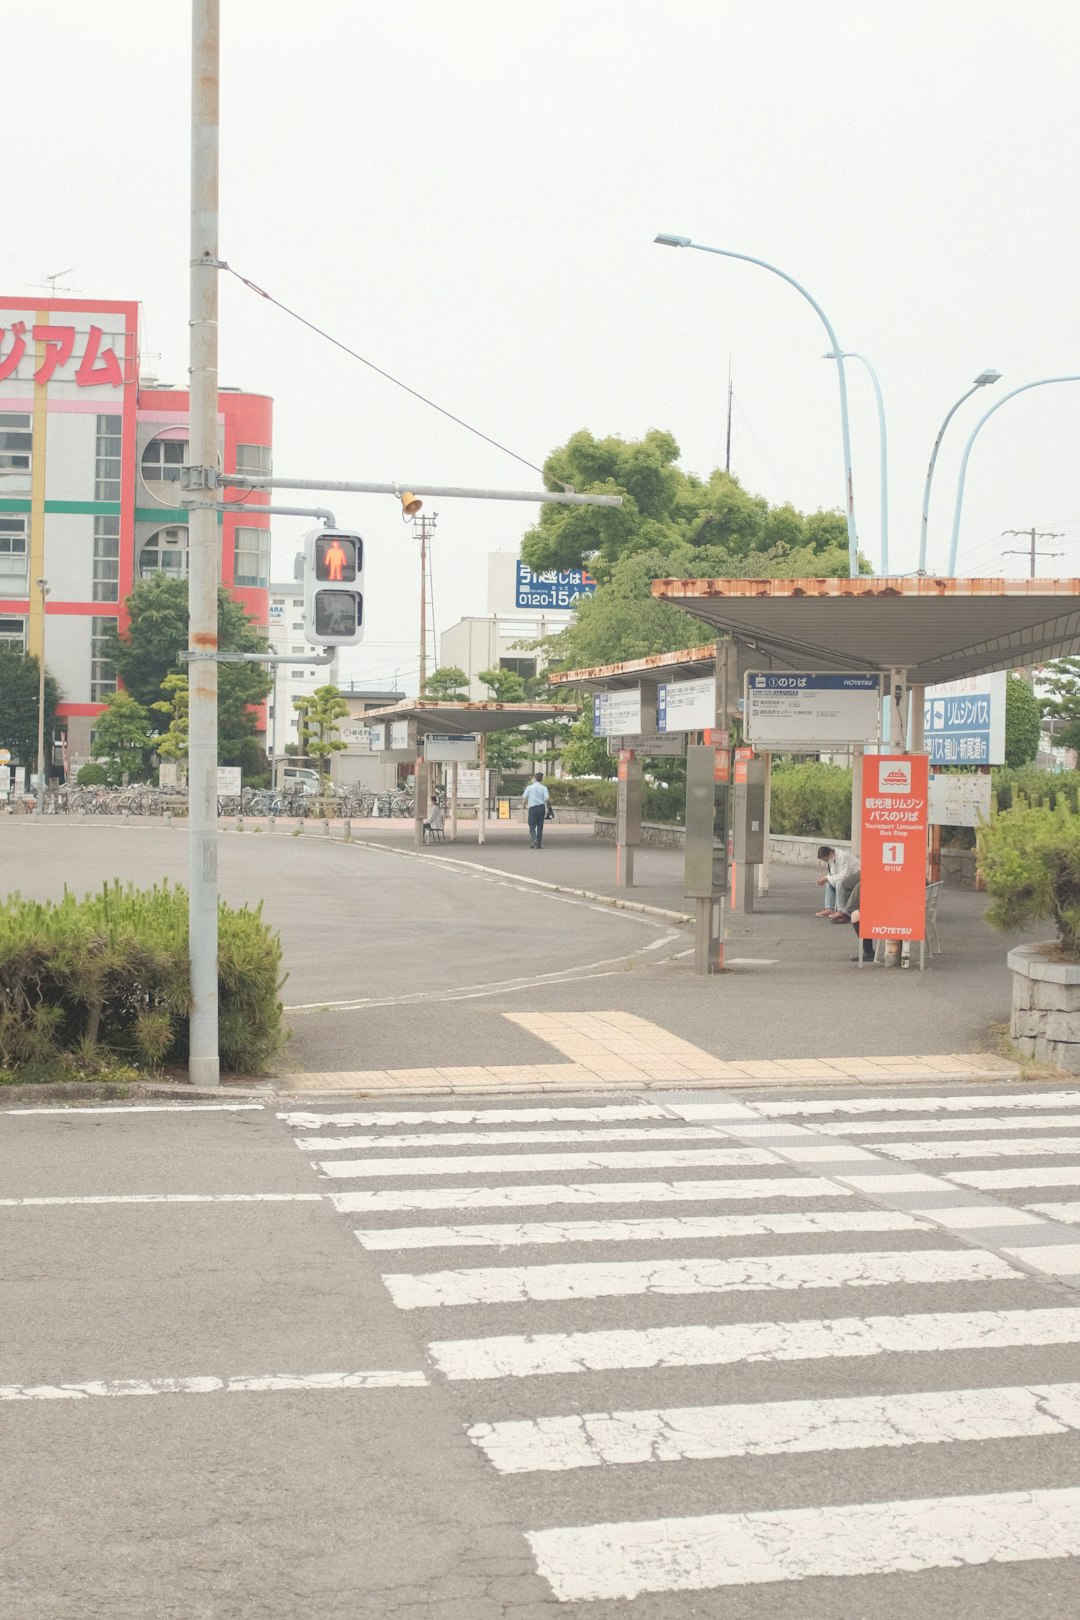 pedestrian lane with traffic light